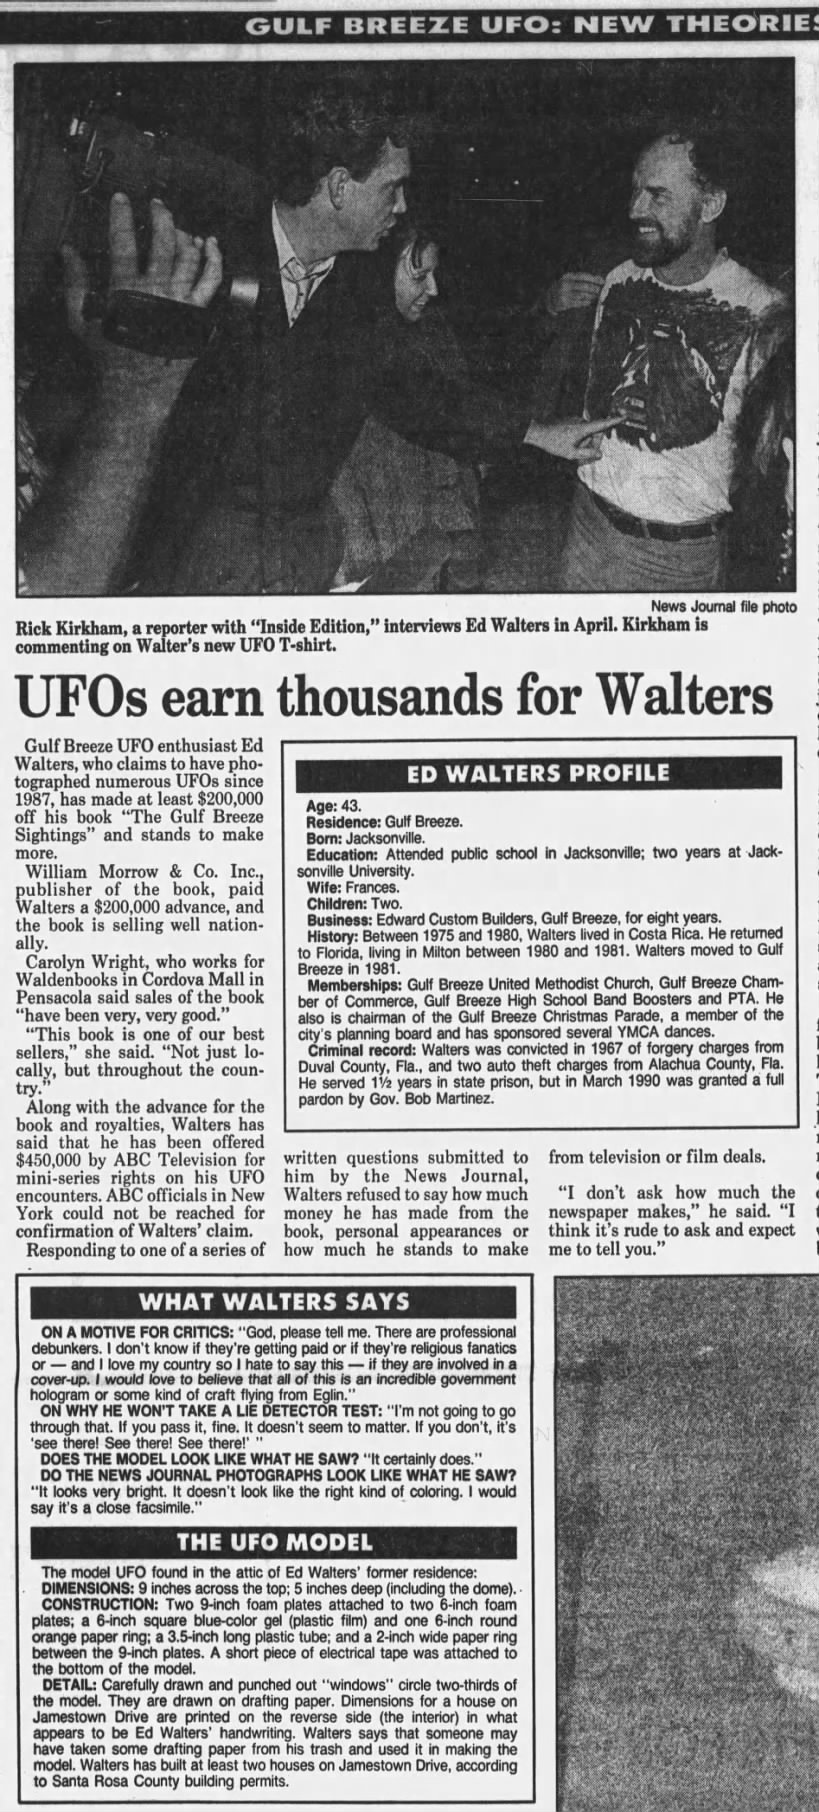 Pensacola News Journal - June 10, 1990 - page 8A - Gulf Breeze UFO